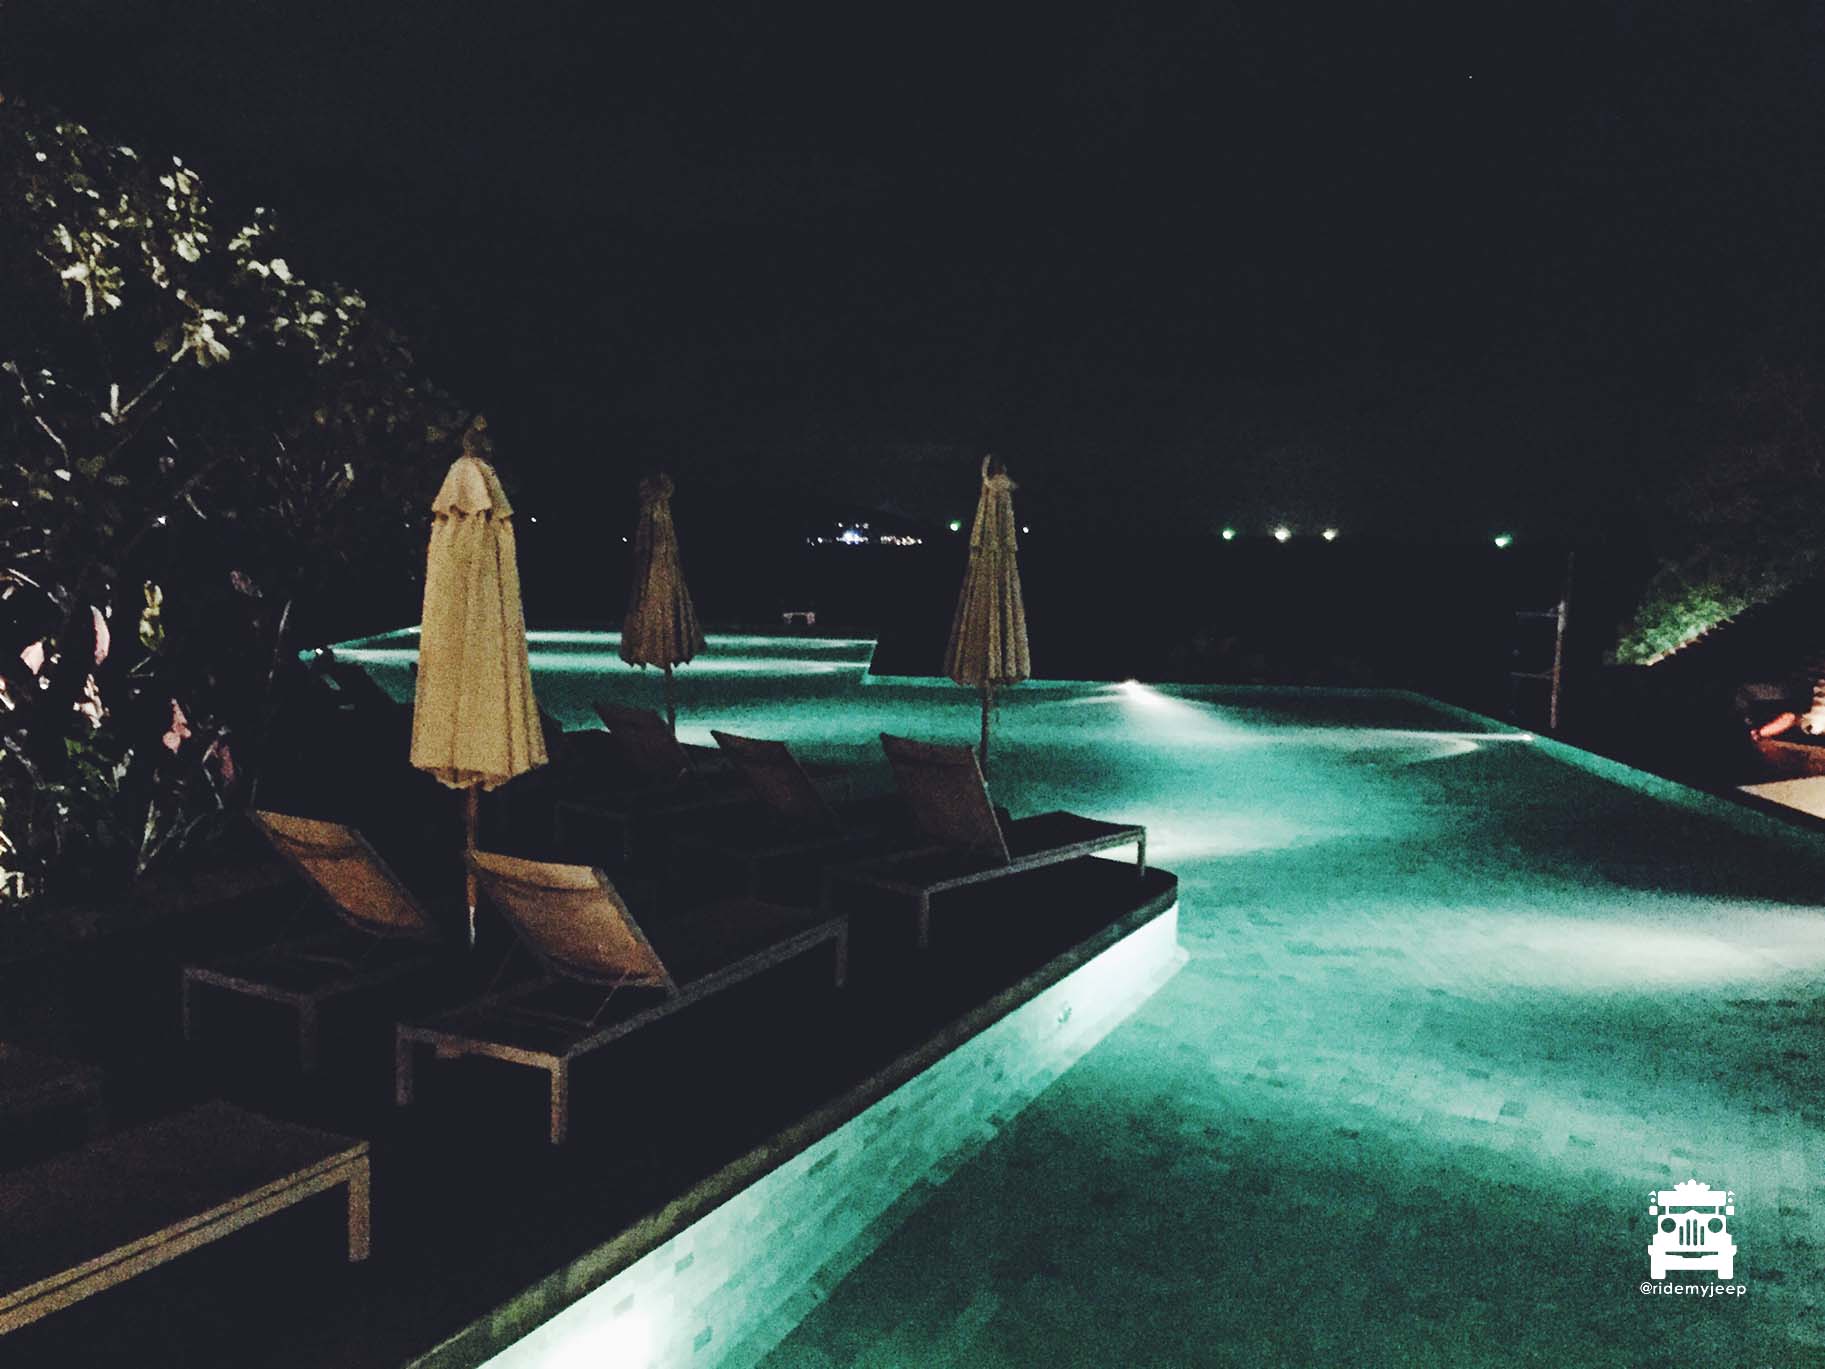 Pool at night